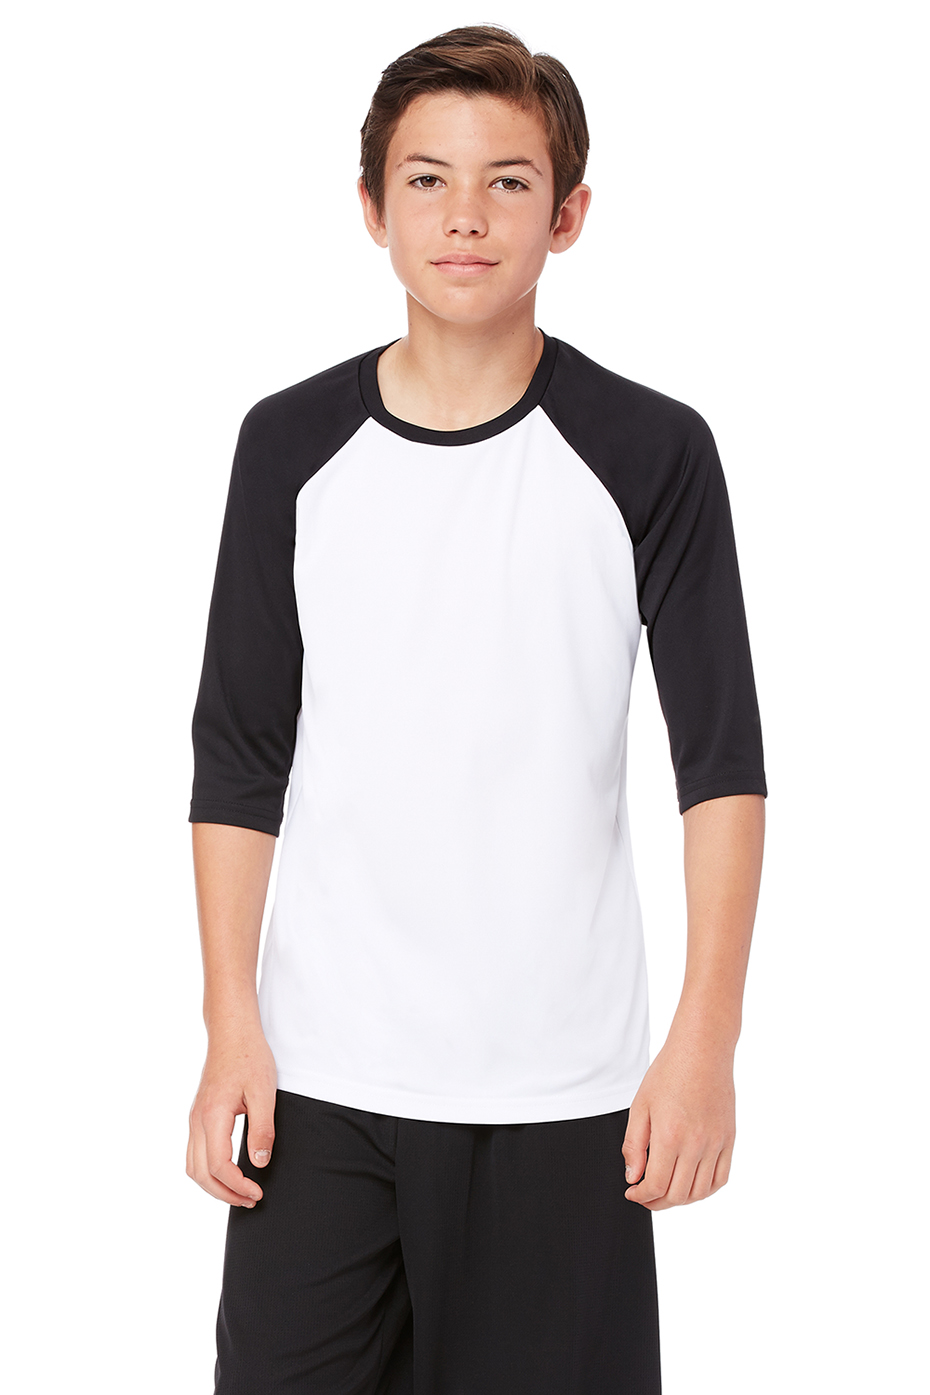 ZeldaRRay OneRepublic Logo Shirt Womens Baseball T Shirt Short Sleeve Round Neck Tee Shirt Black 